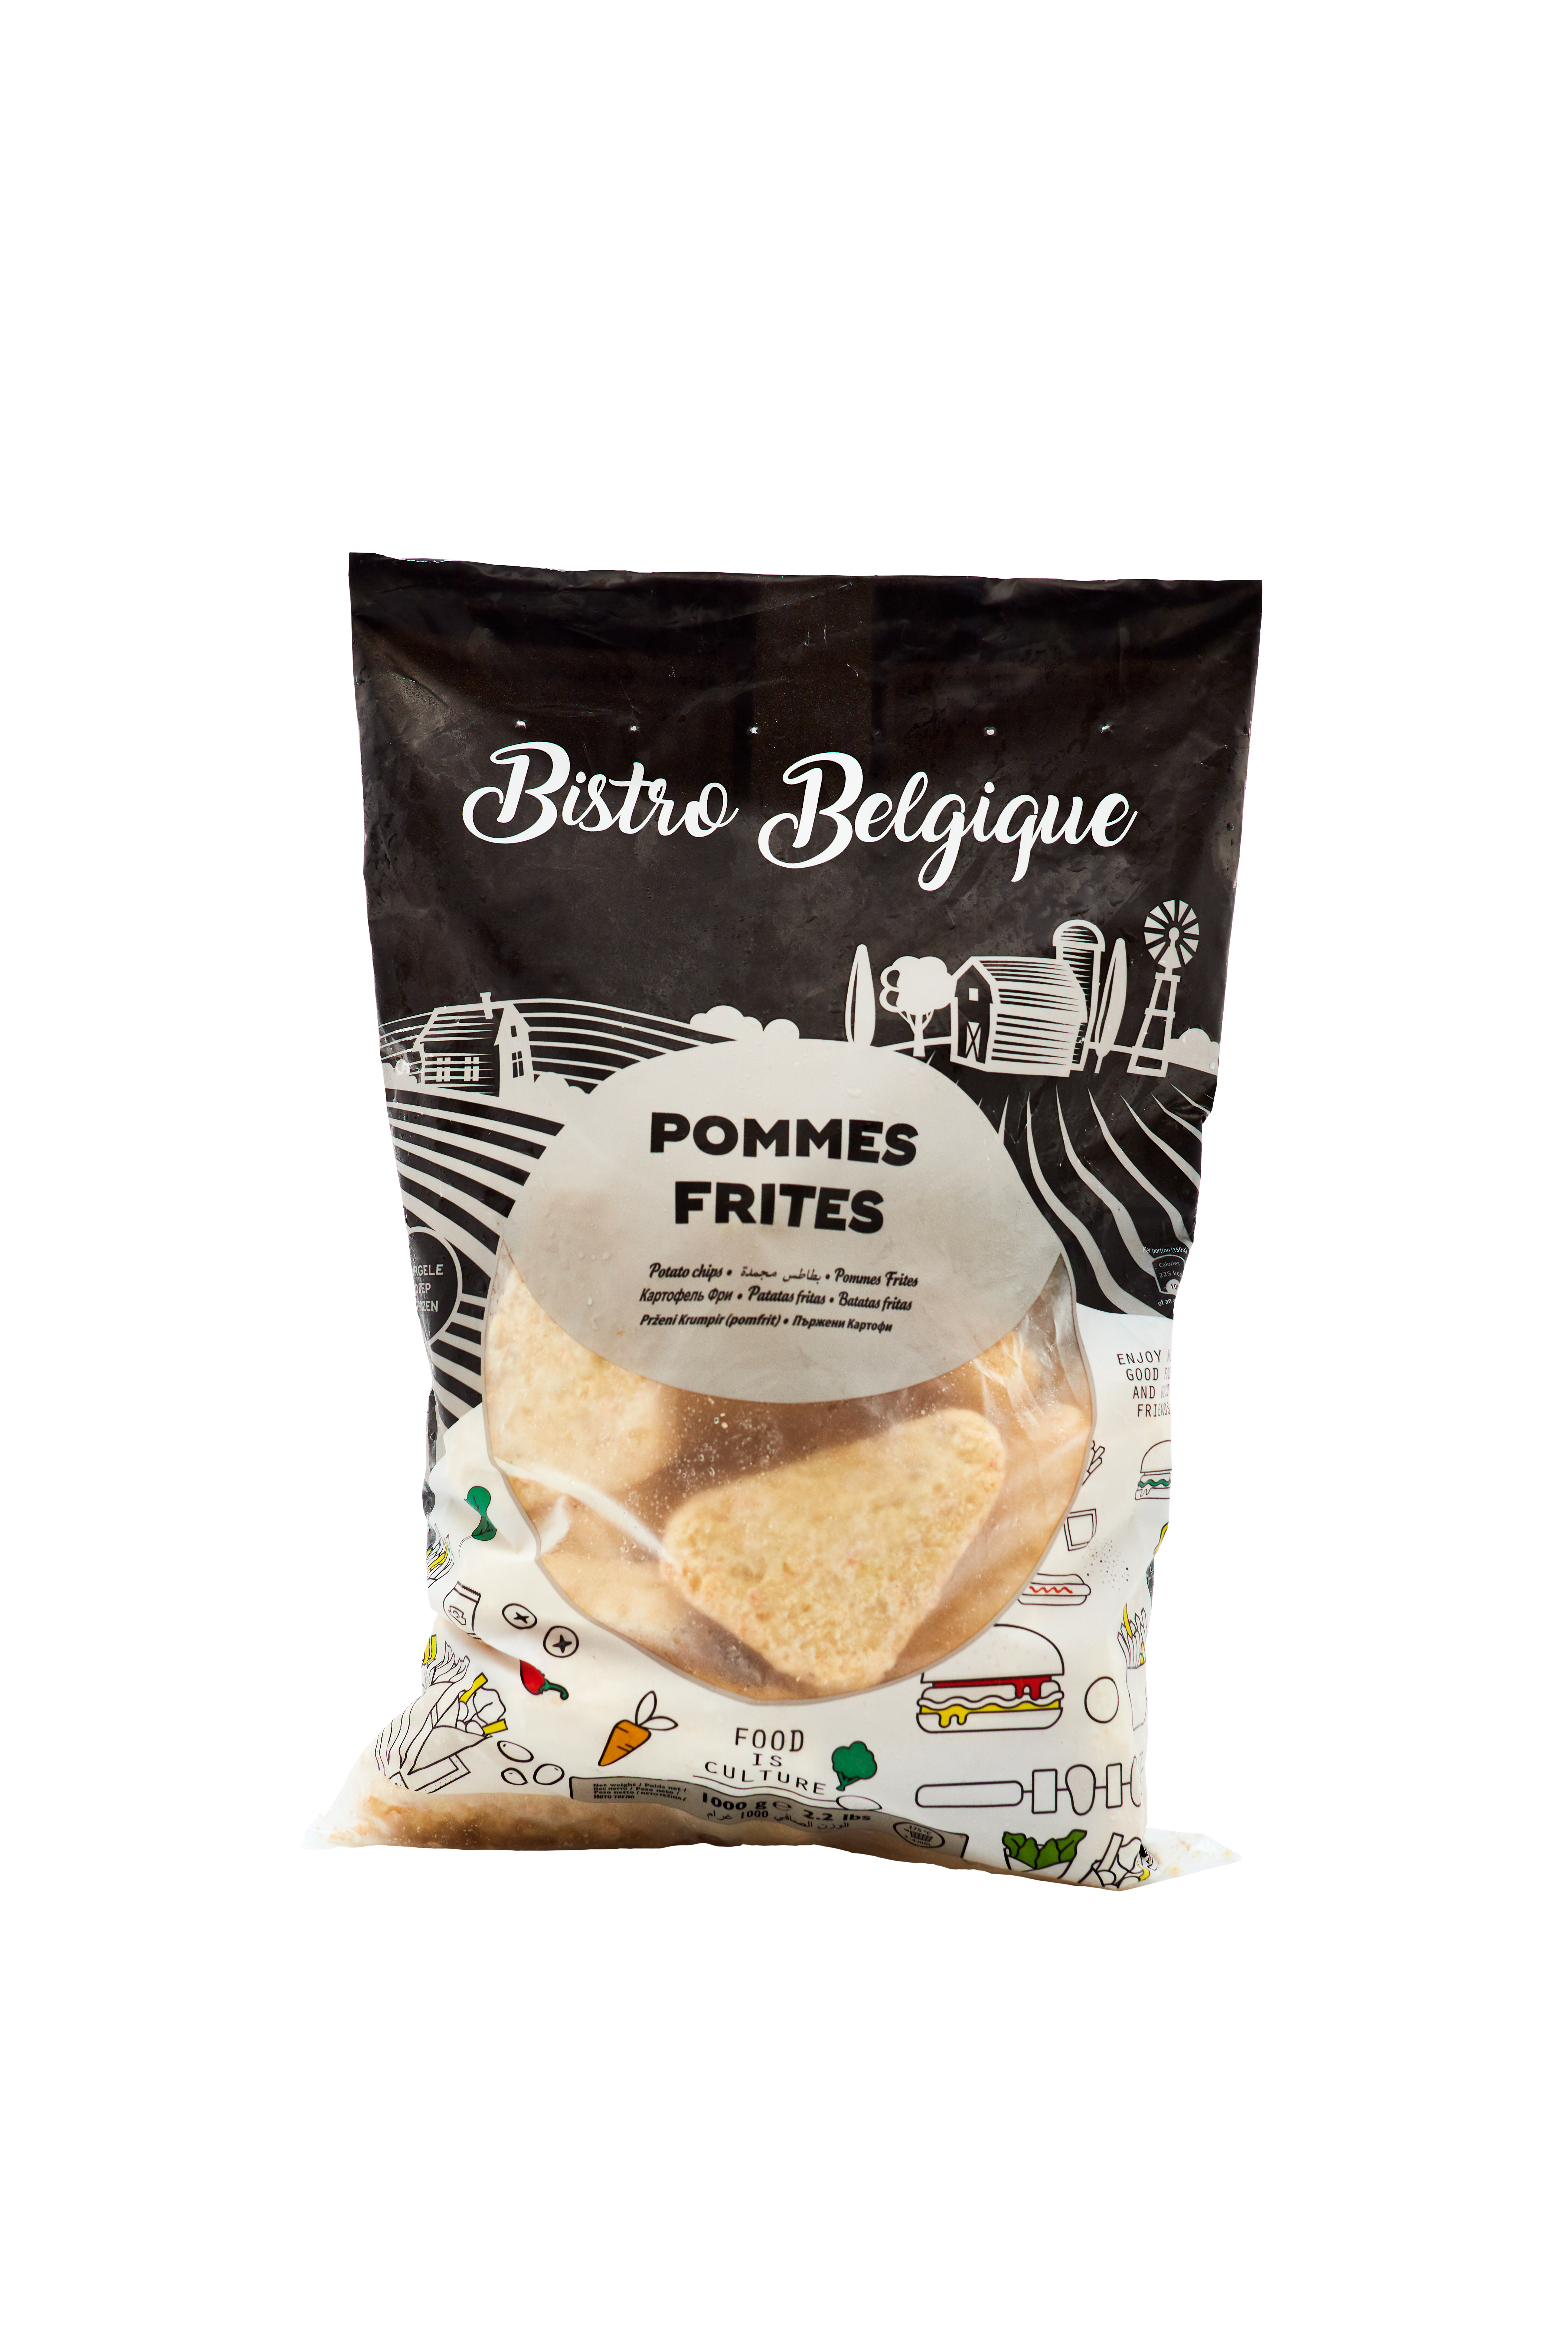 Croquettes packaging Bistro Belgique brand